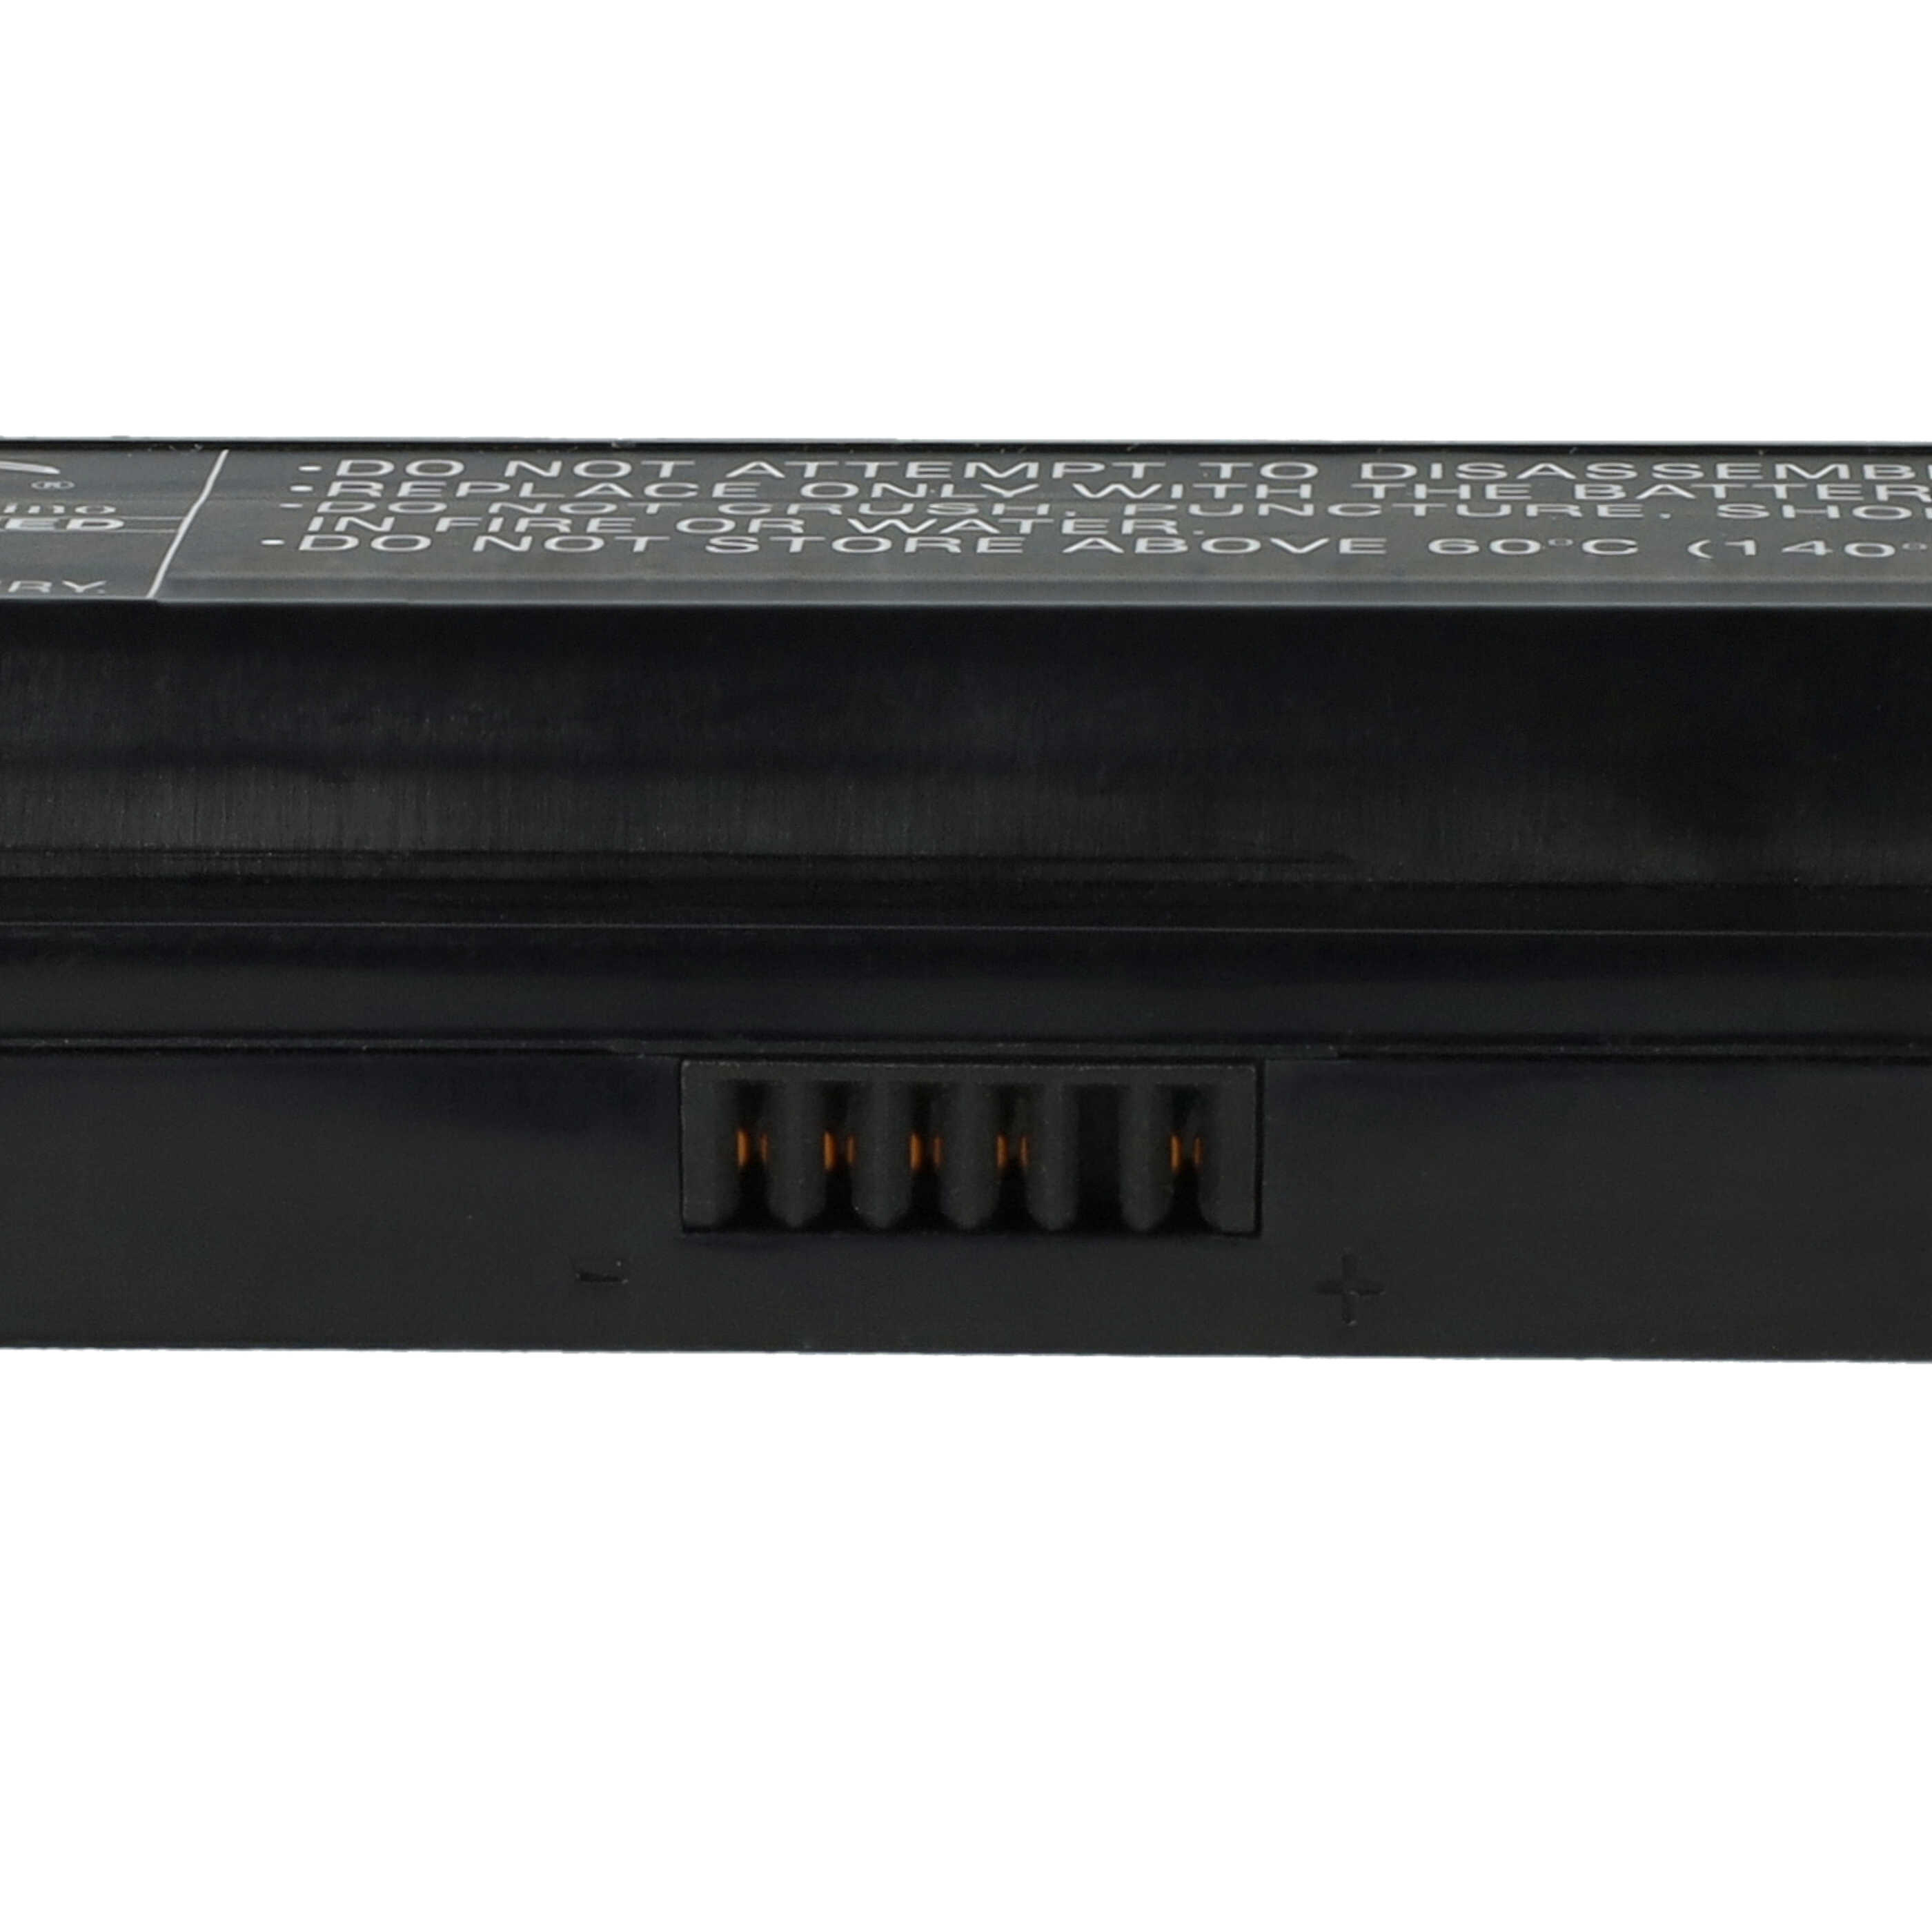 Akumulator do laptopa zamiennik Clevo 6-87-N350S-4D7, 6-87-N350S-4D8, N350BAT-6 - 5200 mAh 11,1 V Li-Ion